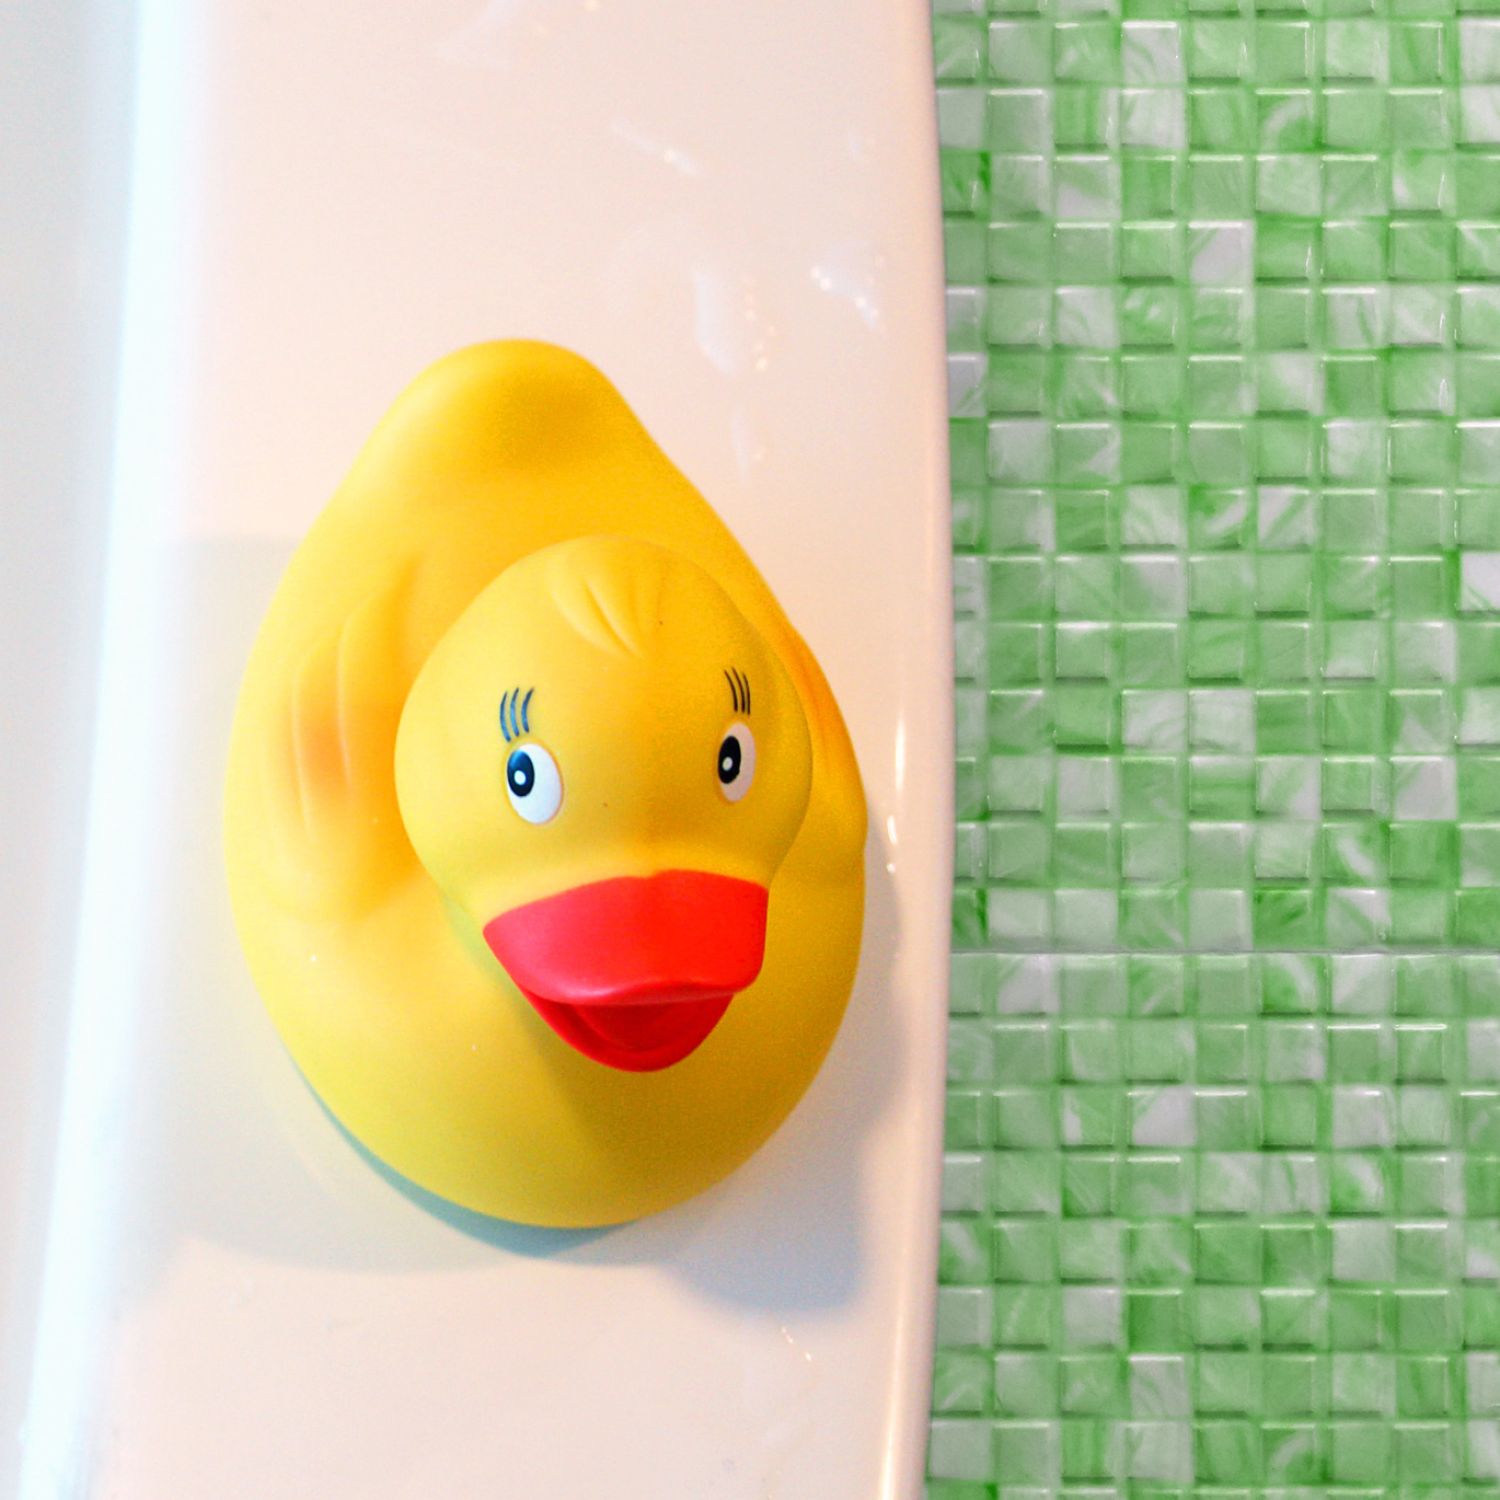 Rubber ducky on a tub in a bathroom